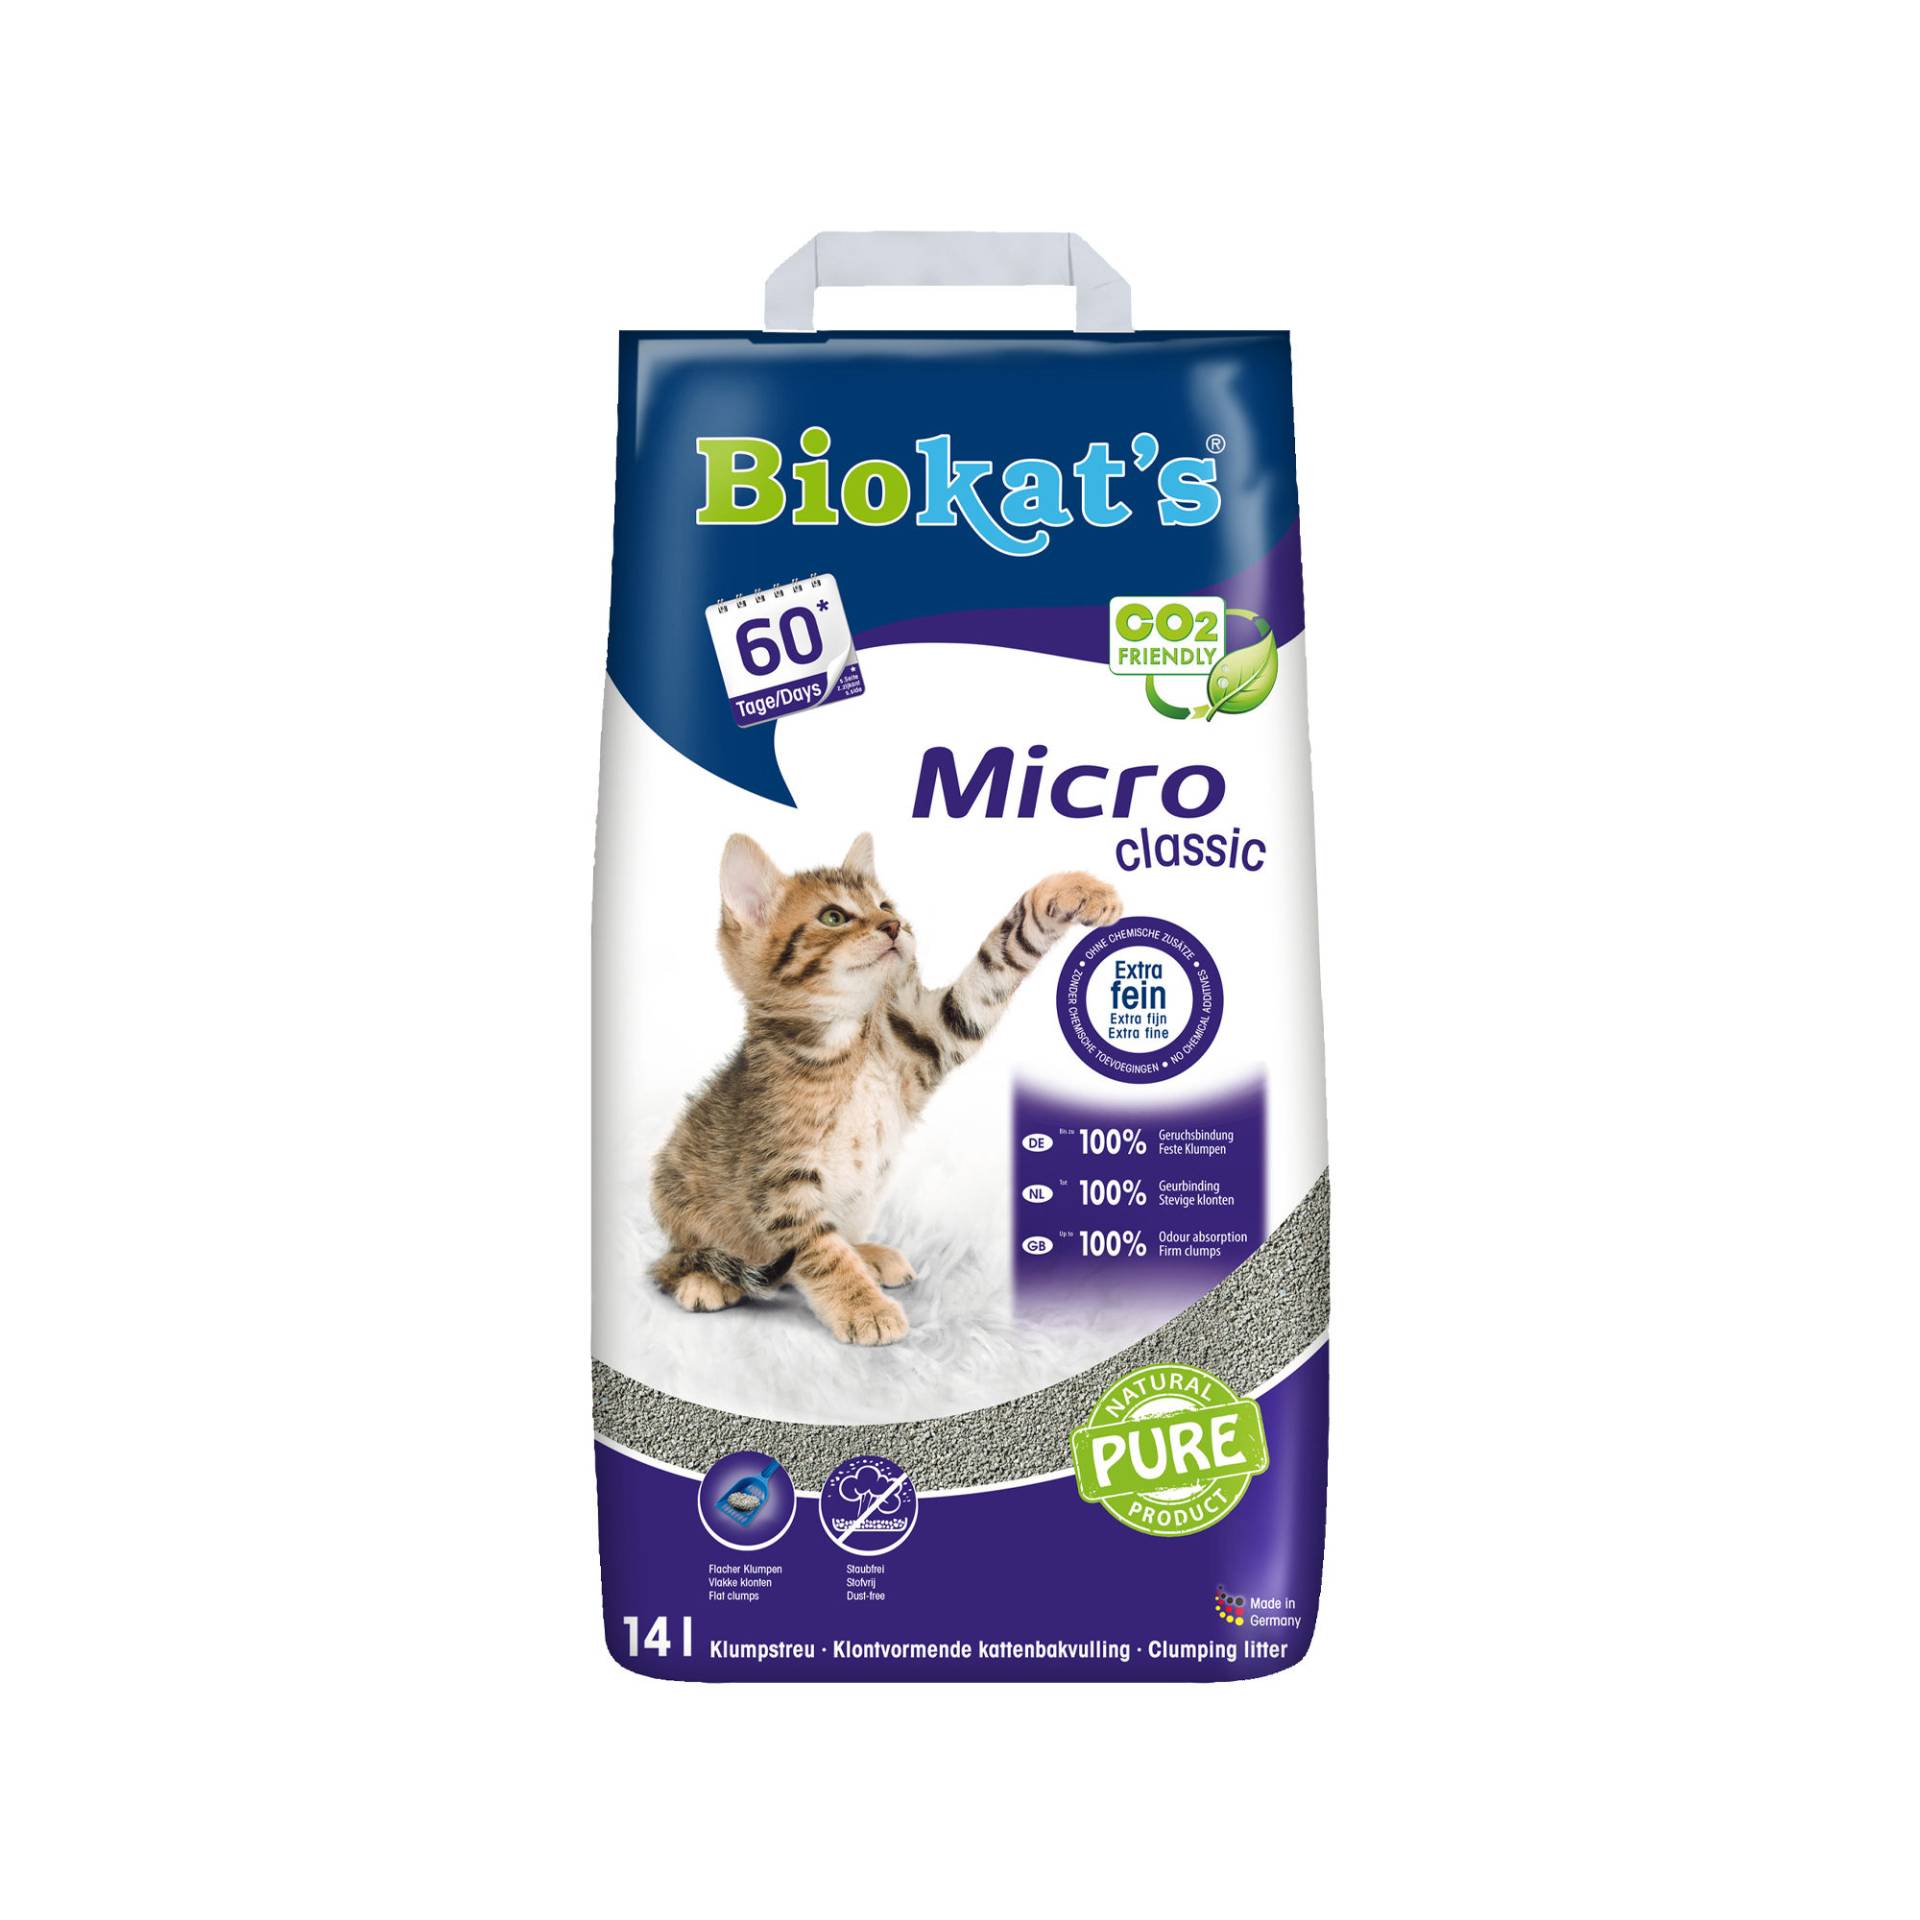 Biokat Micro (Fresh) - 14 liter von Biokat